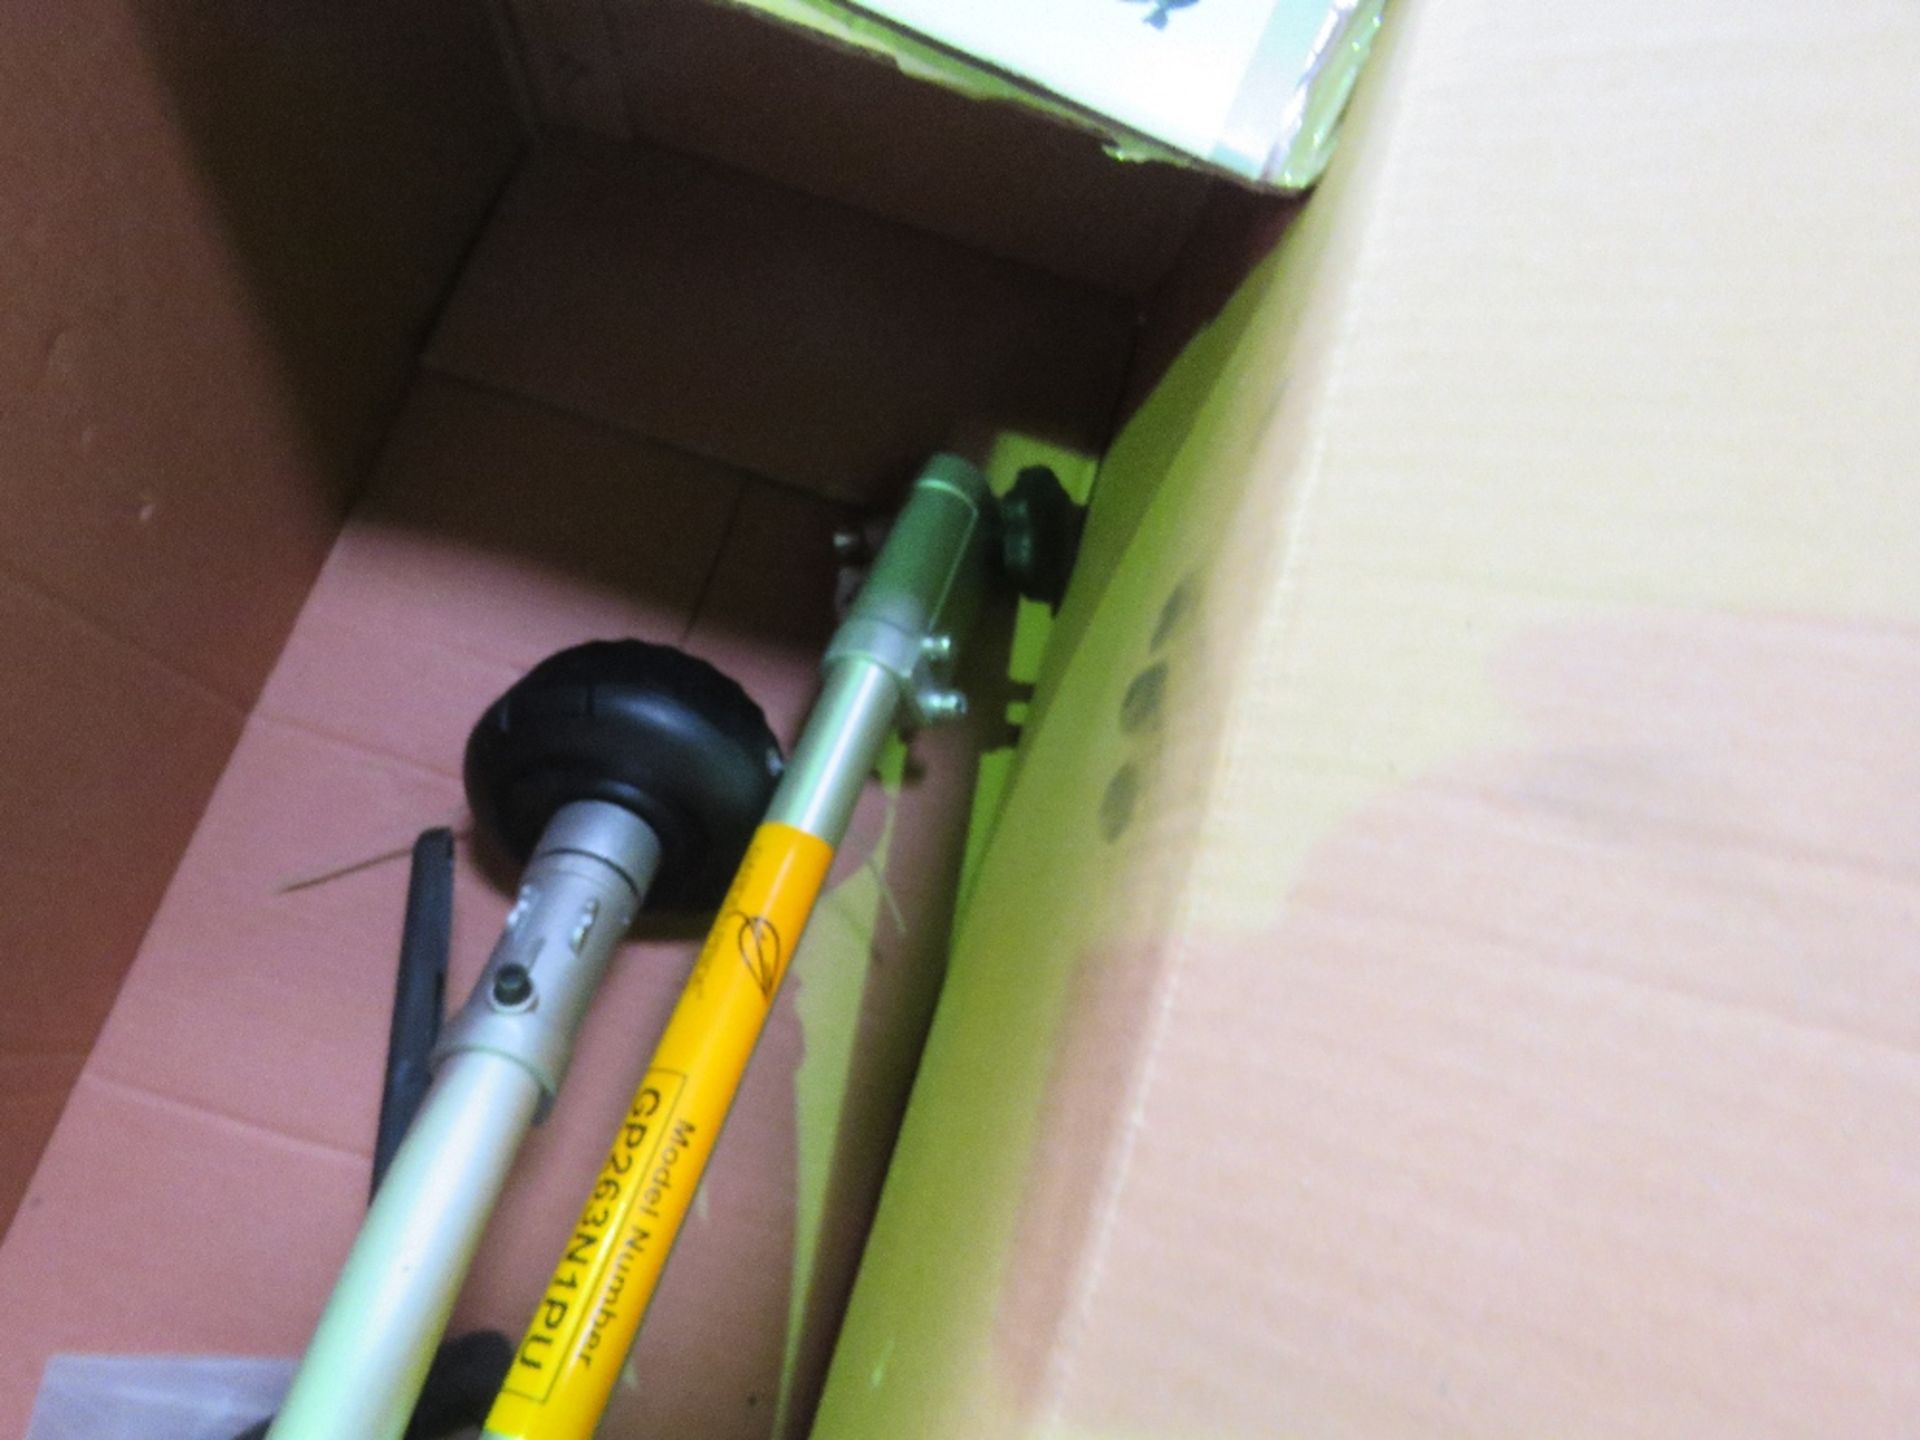 GARDENPRIDE PETROL STRIMMER SET IN A BOX. - Image 2 of 4